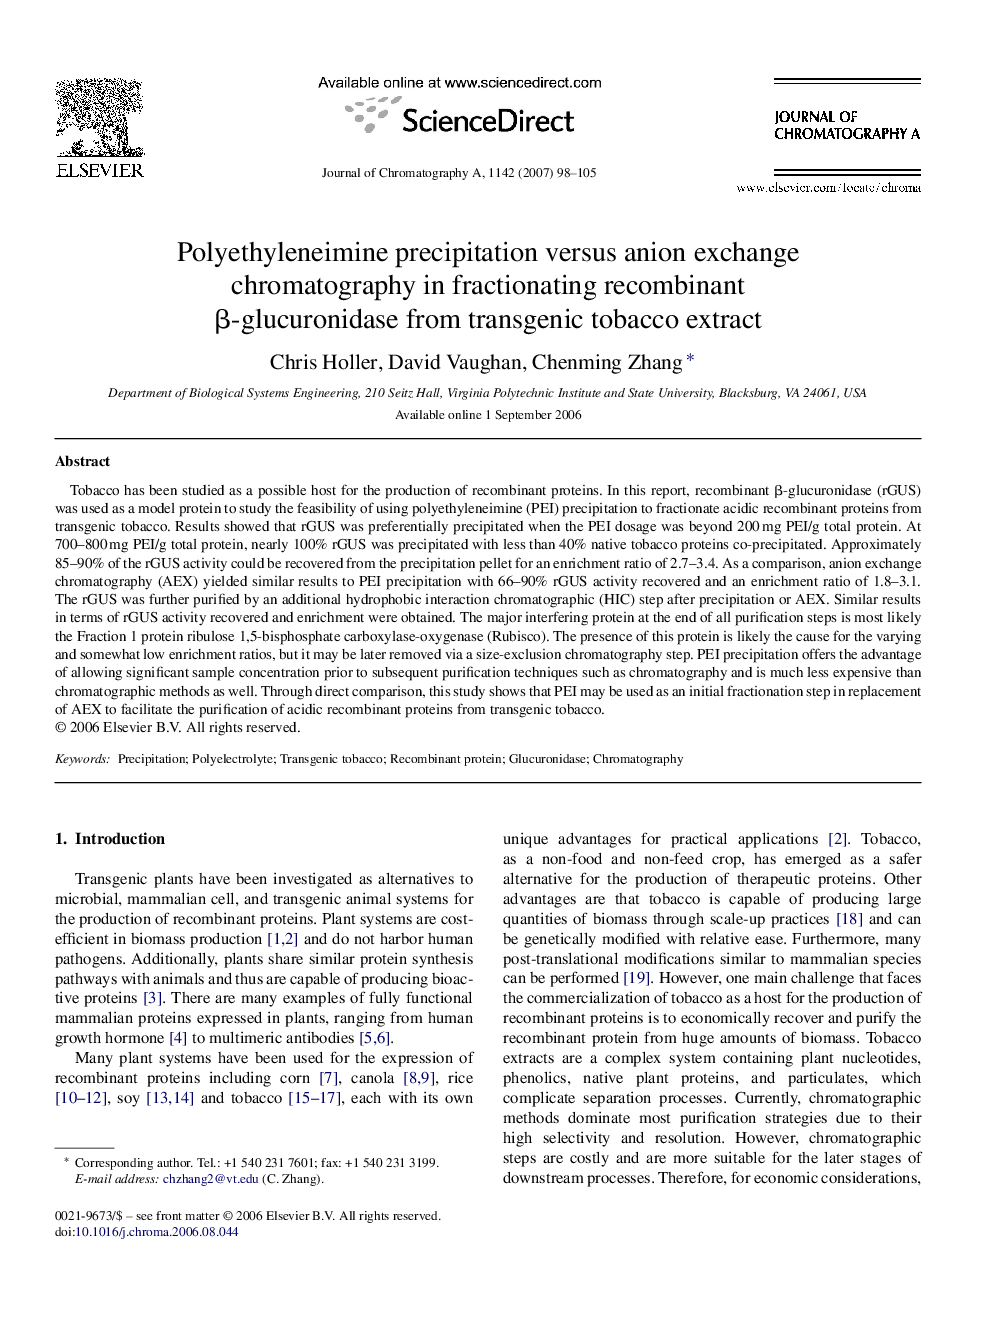 Polyethyleneimine precipitation versus anion exchange chromatography in fractionating recombinant β-glucuronidase from transgenic tobacco extract